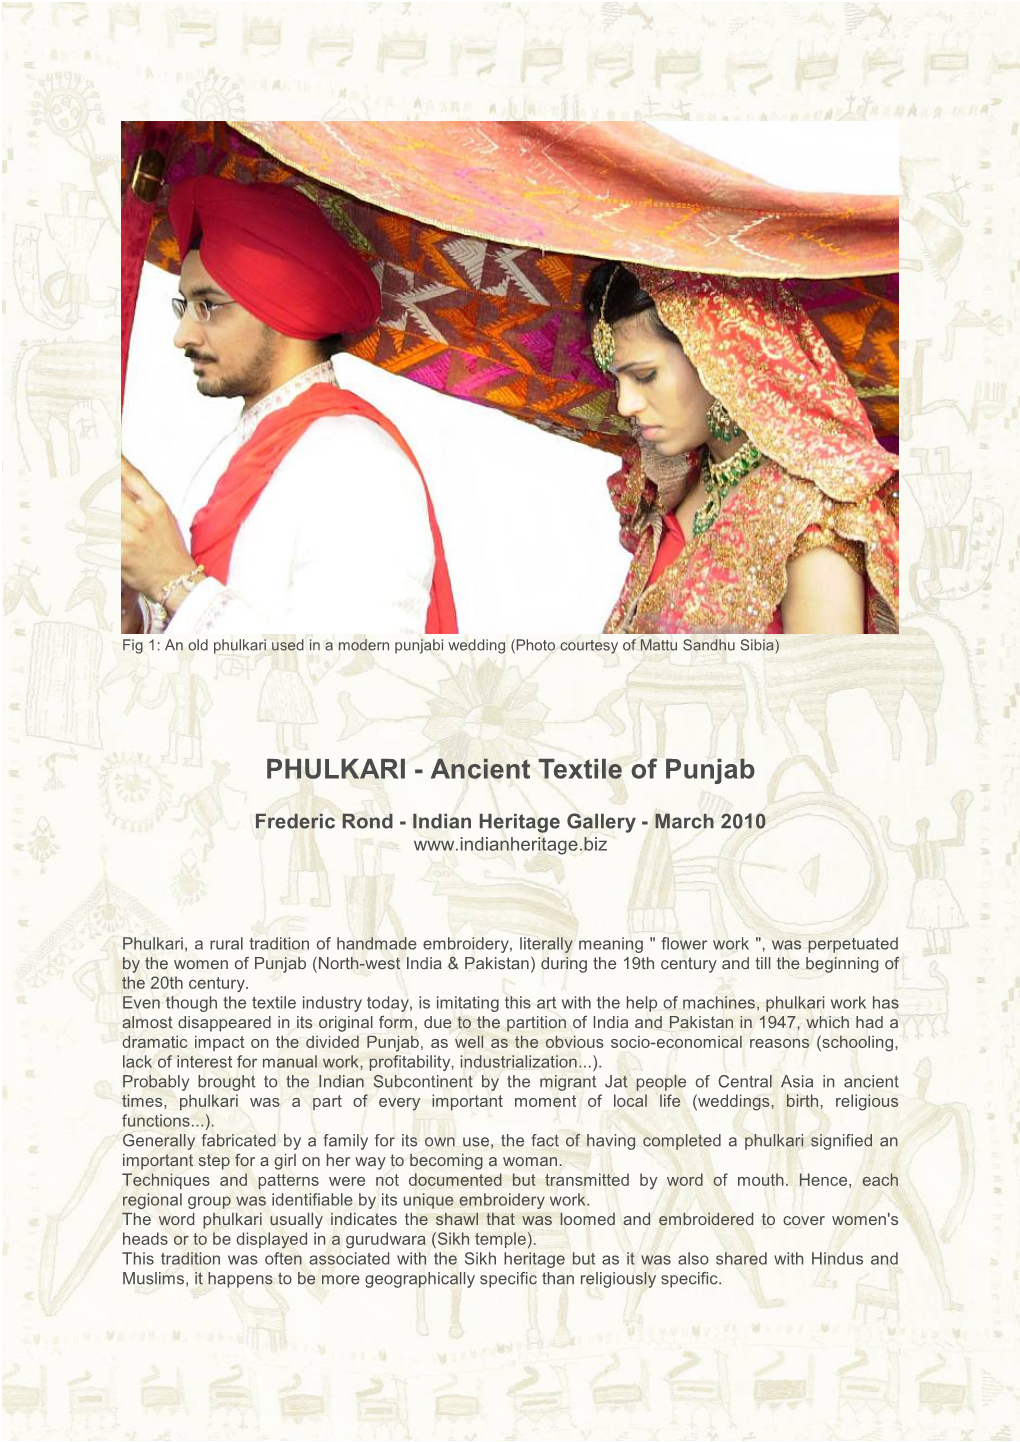 Phulkari Used in a Modern Punjabi Wedding (Photo Courtesy of Mattu Sandhu Sibia)